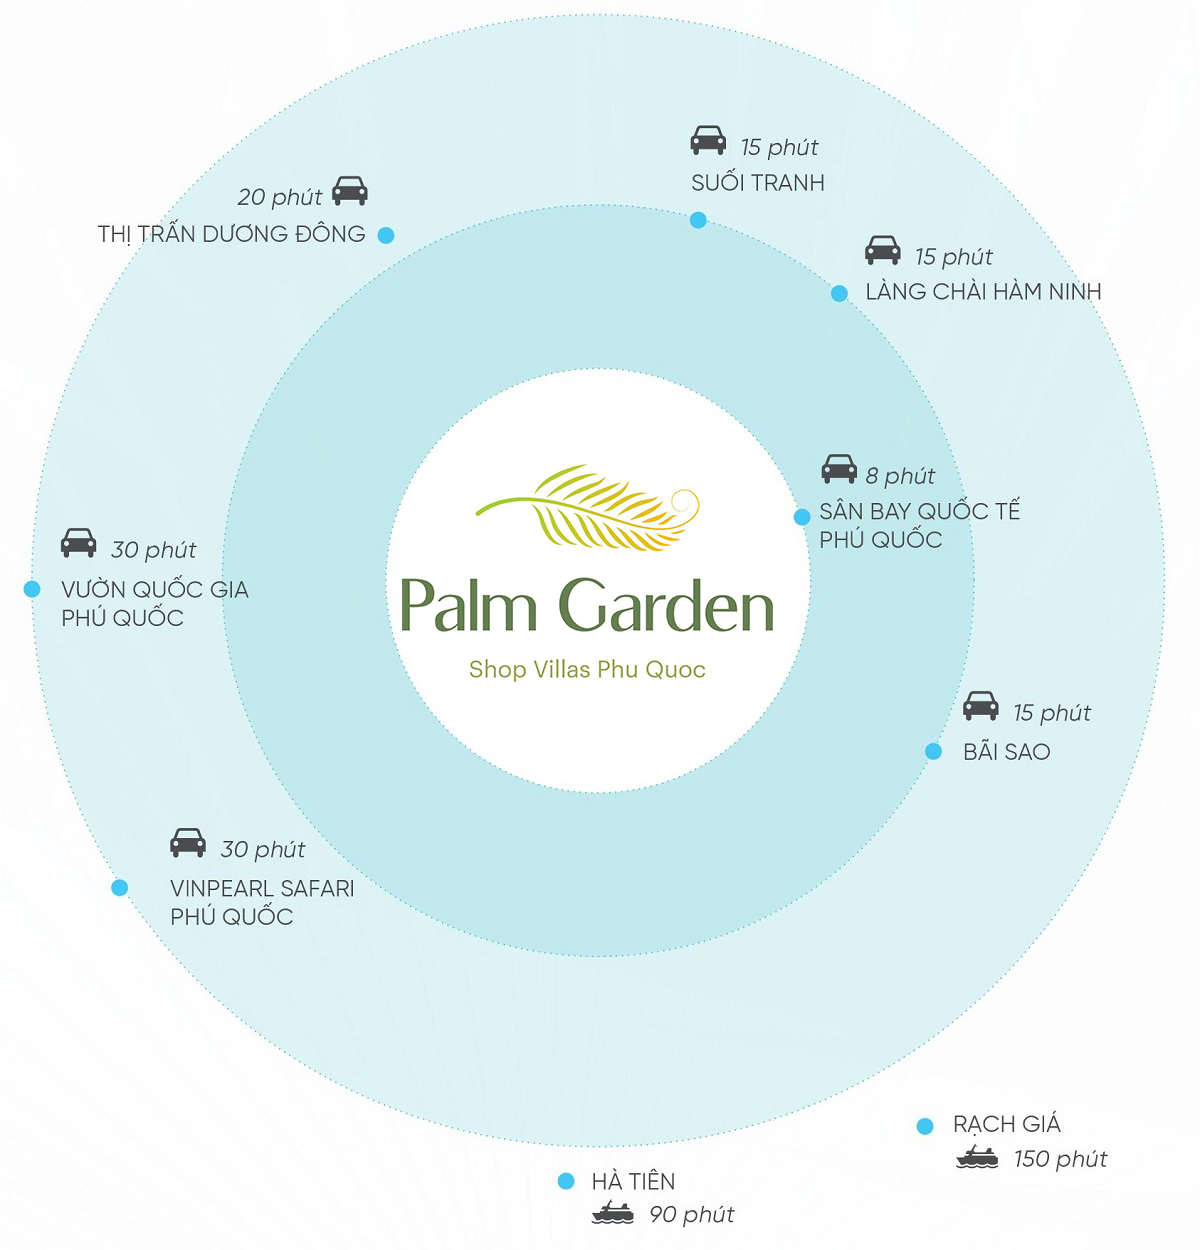 palm garden shop villas phu quoc 1611131 2